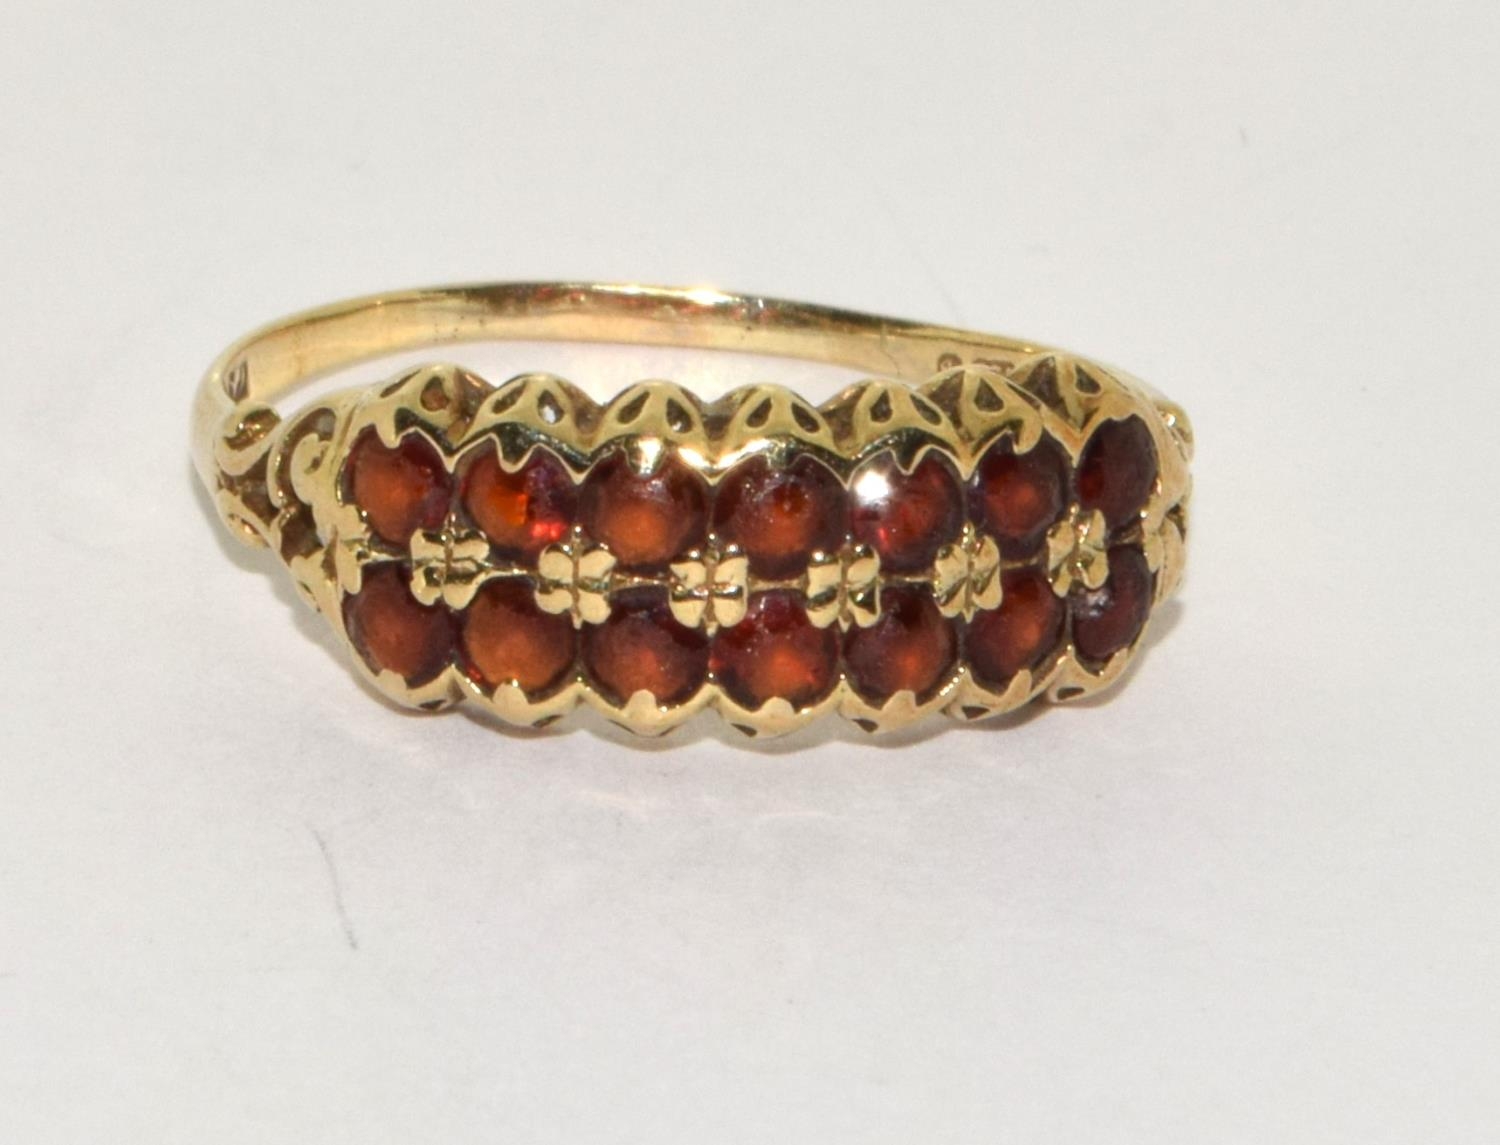 9ct gold ladies twin bar antique set garnet ring size S - Image 5 of 5